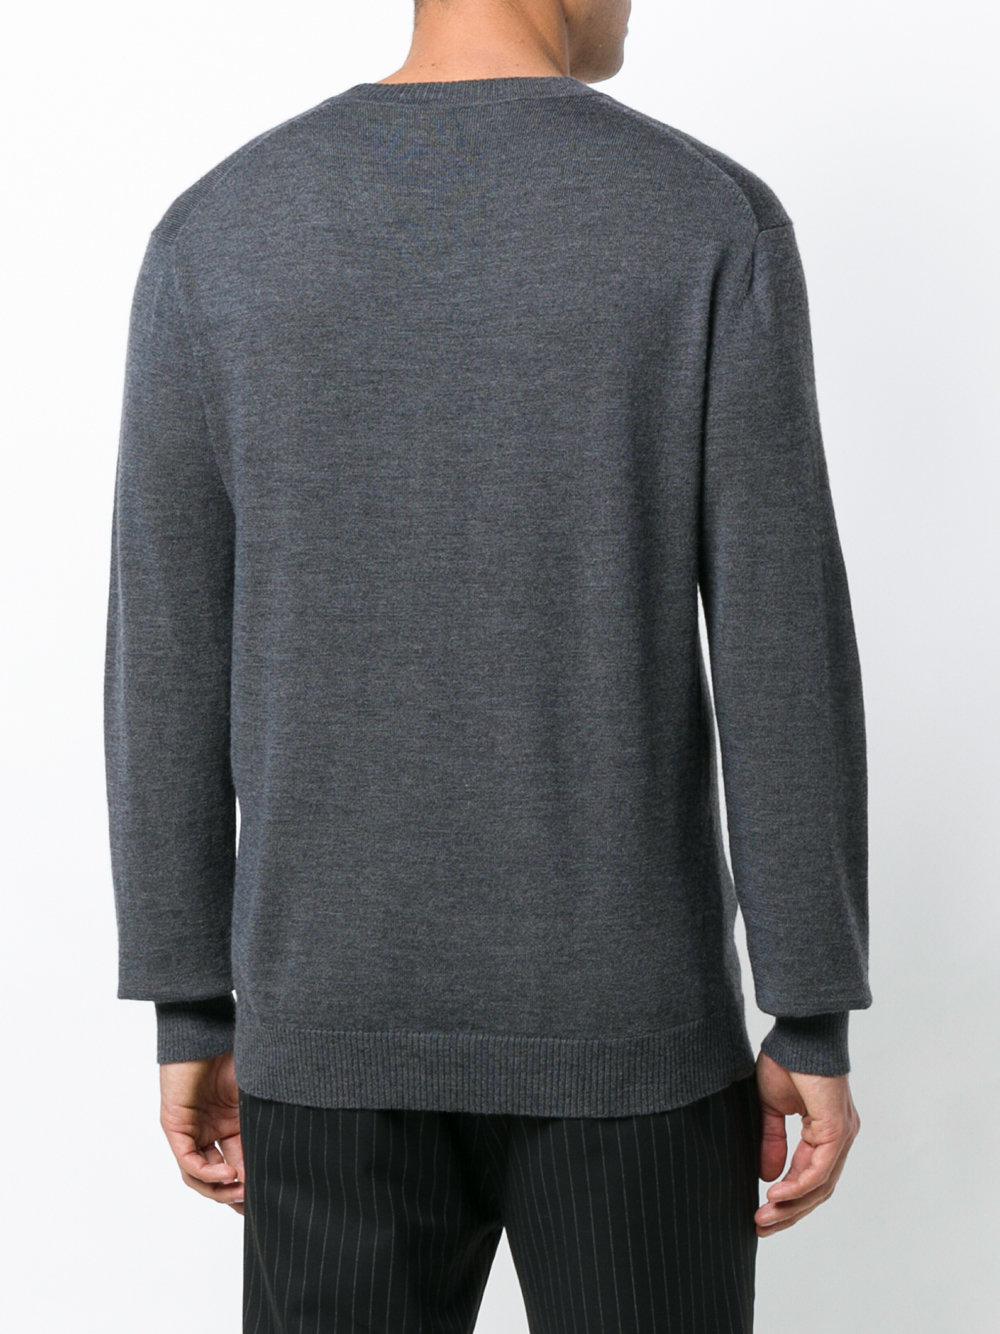 Karl Lagerfeld Wool Karl Ikonik Sweater in Grey (Gray) for Men - Lyst